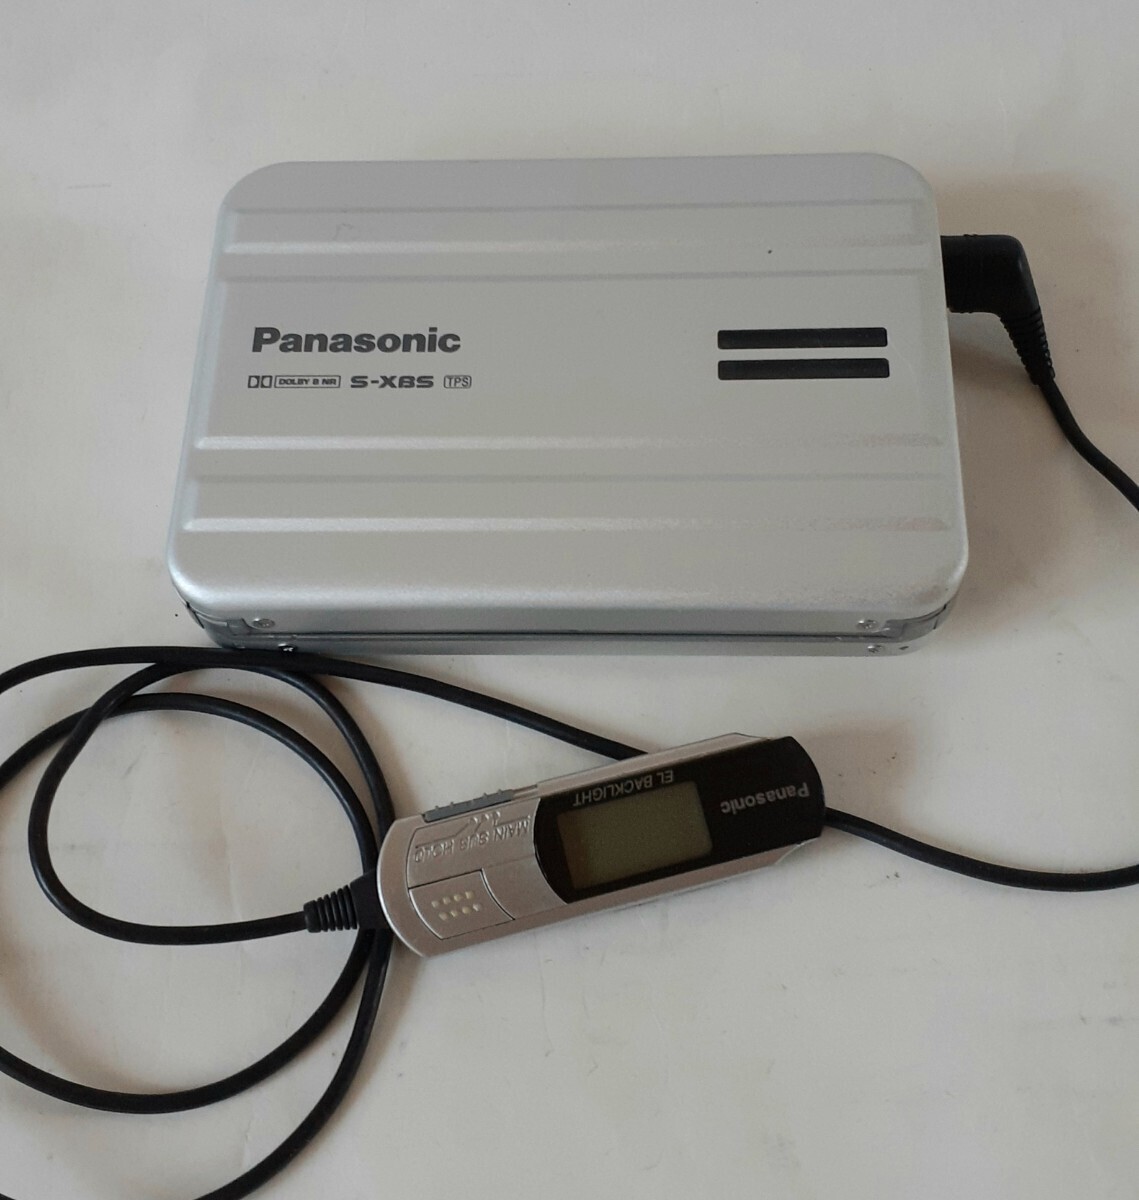  Panasonic Panasonic cassette player silver Junk 